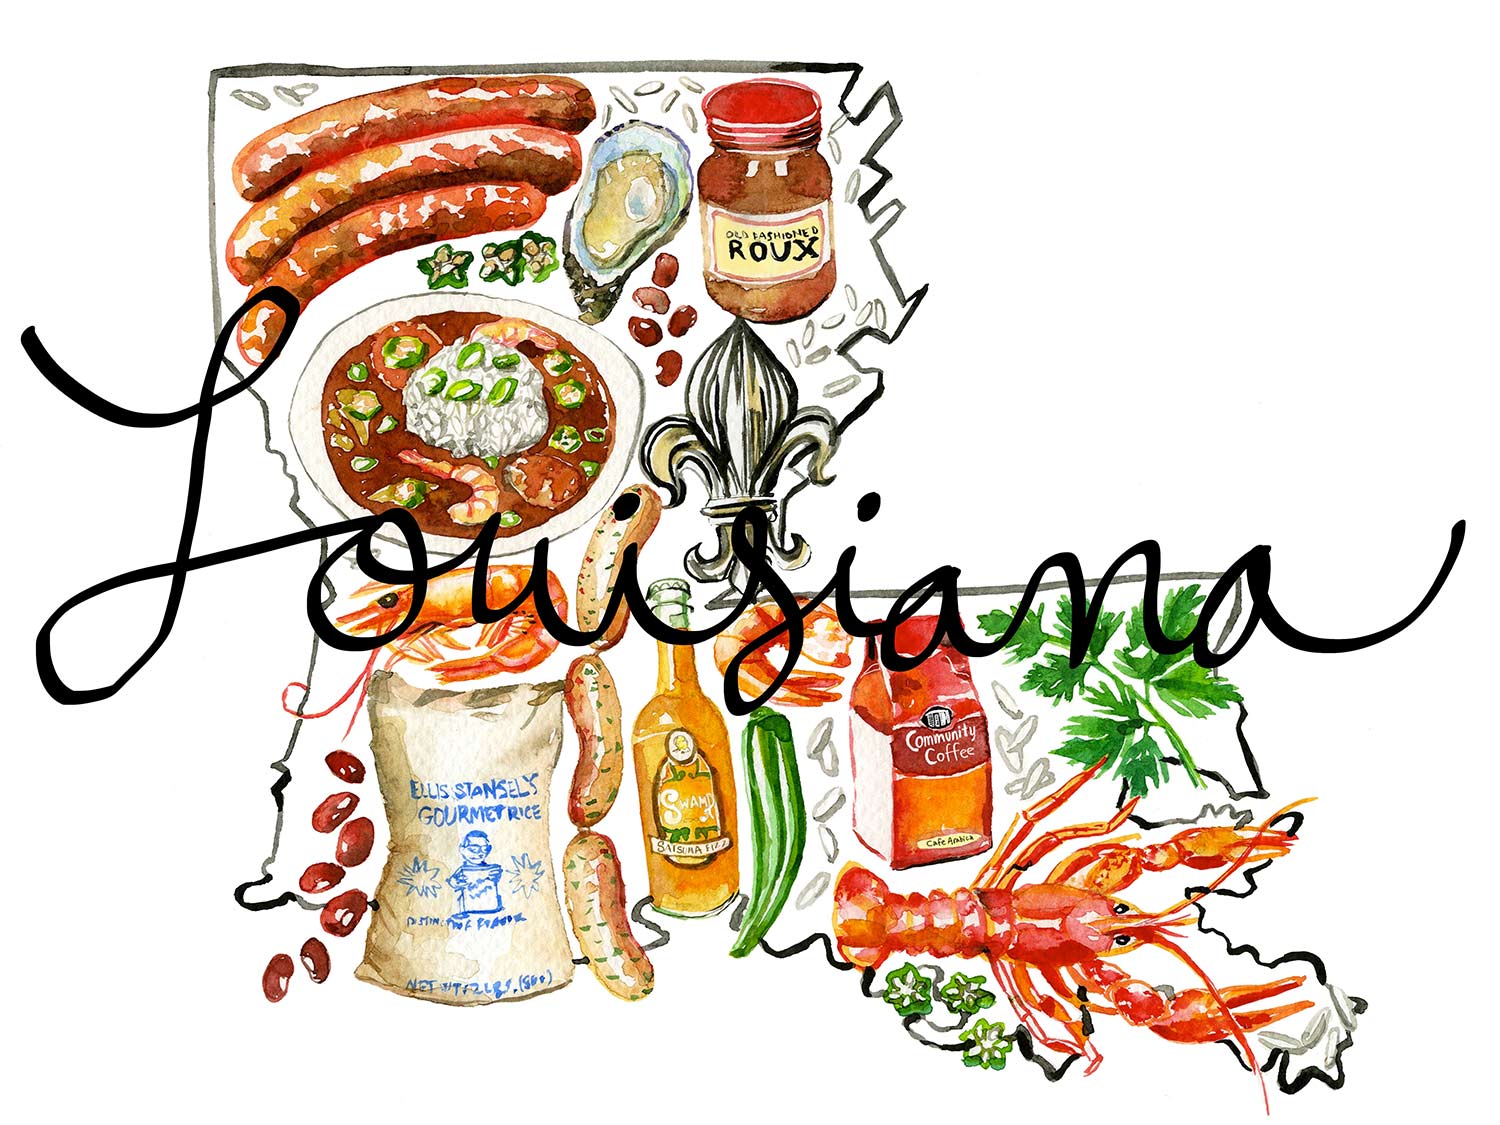 Serious-Eats-Louisiana-Jessie-Kanelos-Weiner-text-web